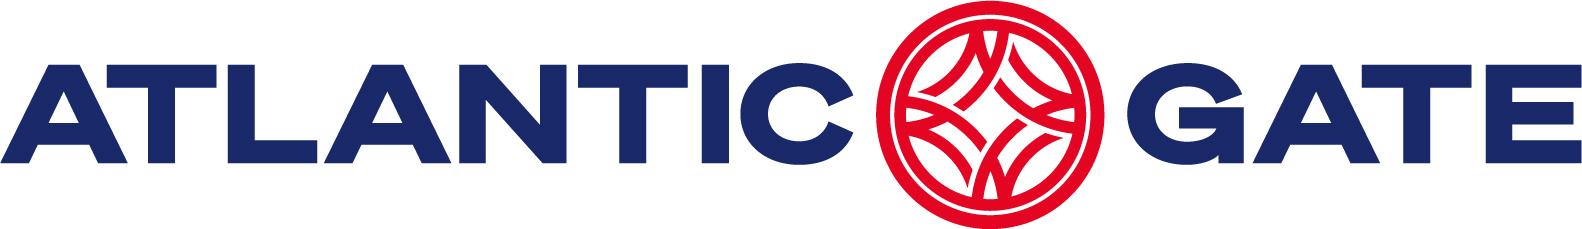 Atlantic Gate Logo